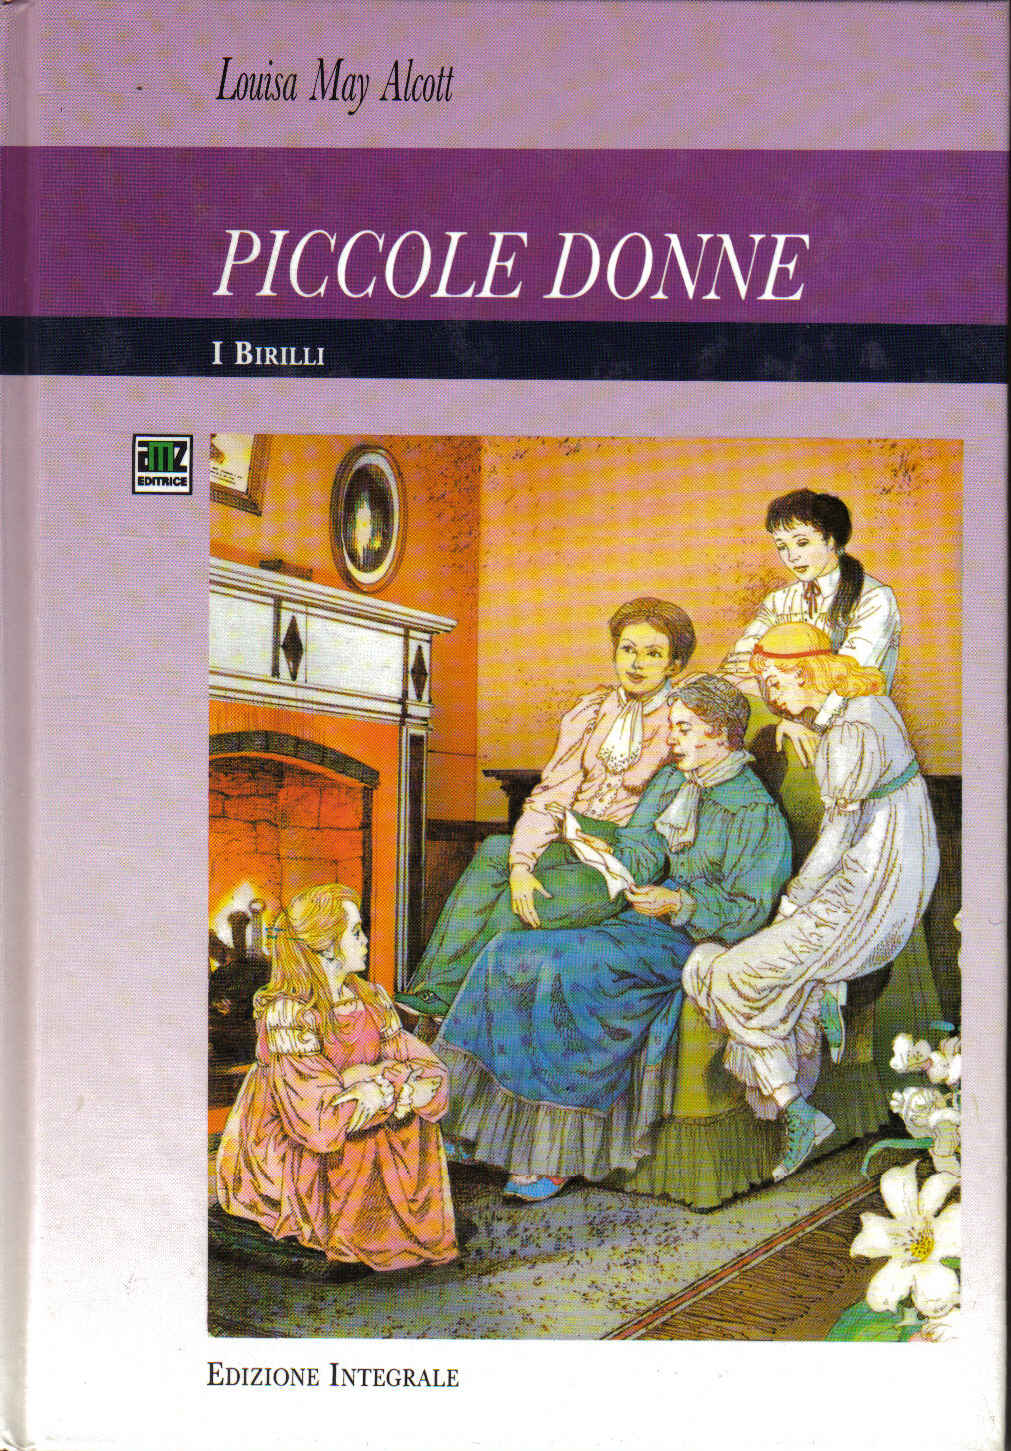 More about Piccole donne